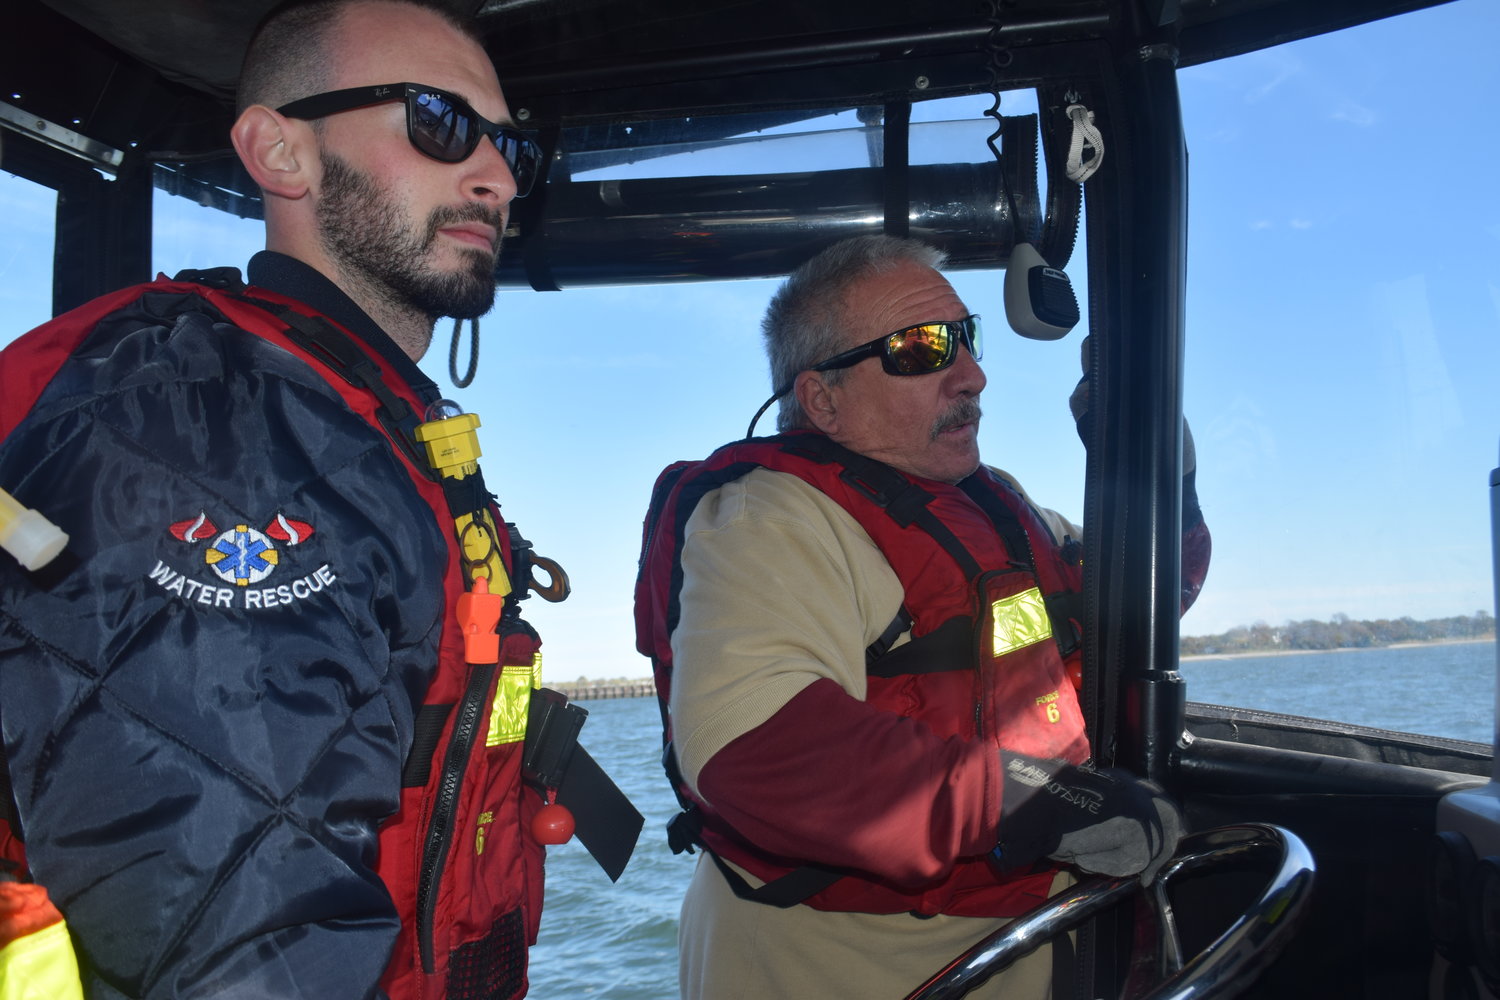 Atlantic Beach Rescue responds to the calls for help | Herald Community ...